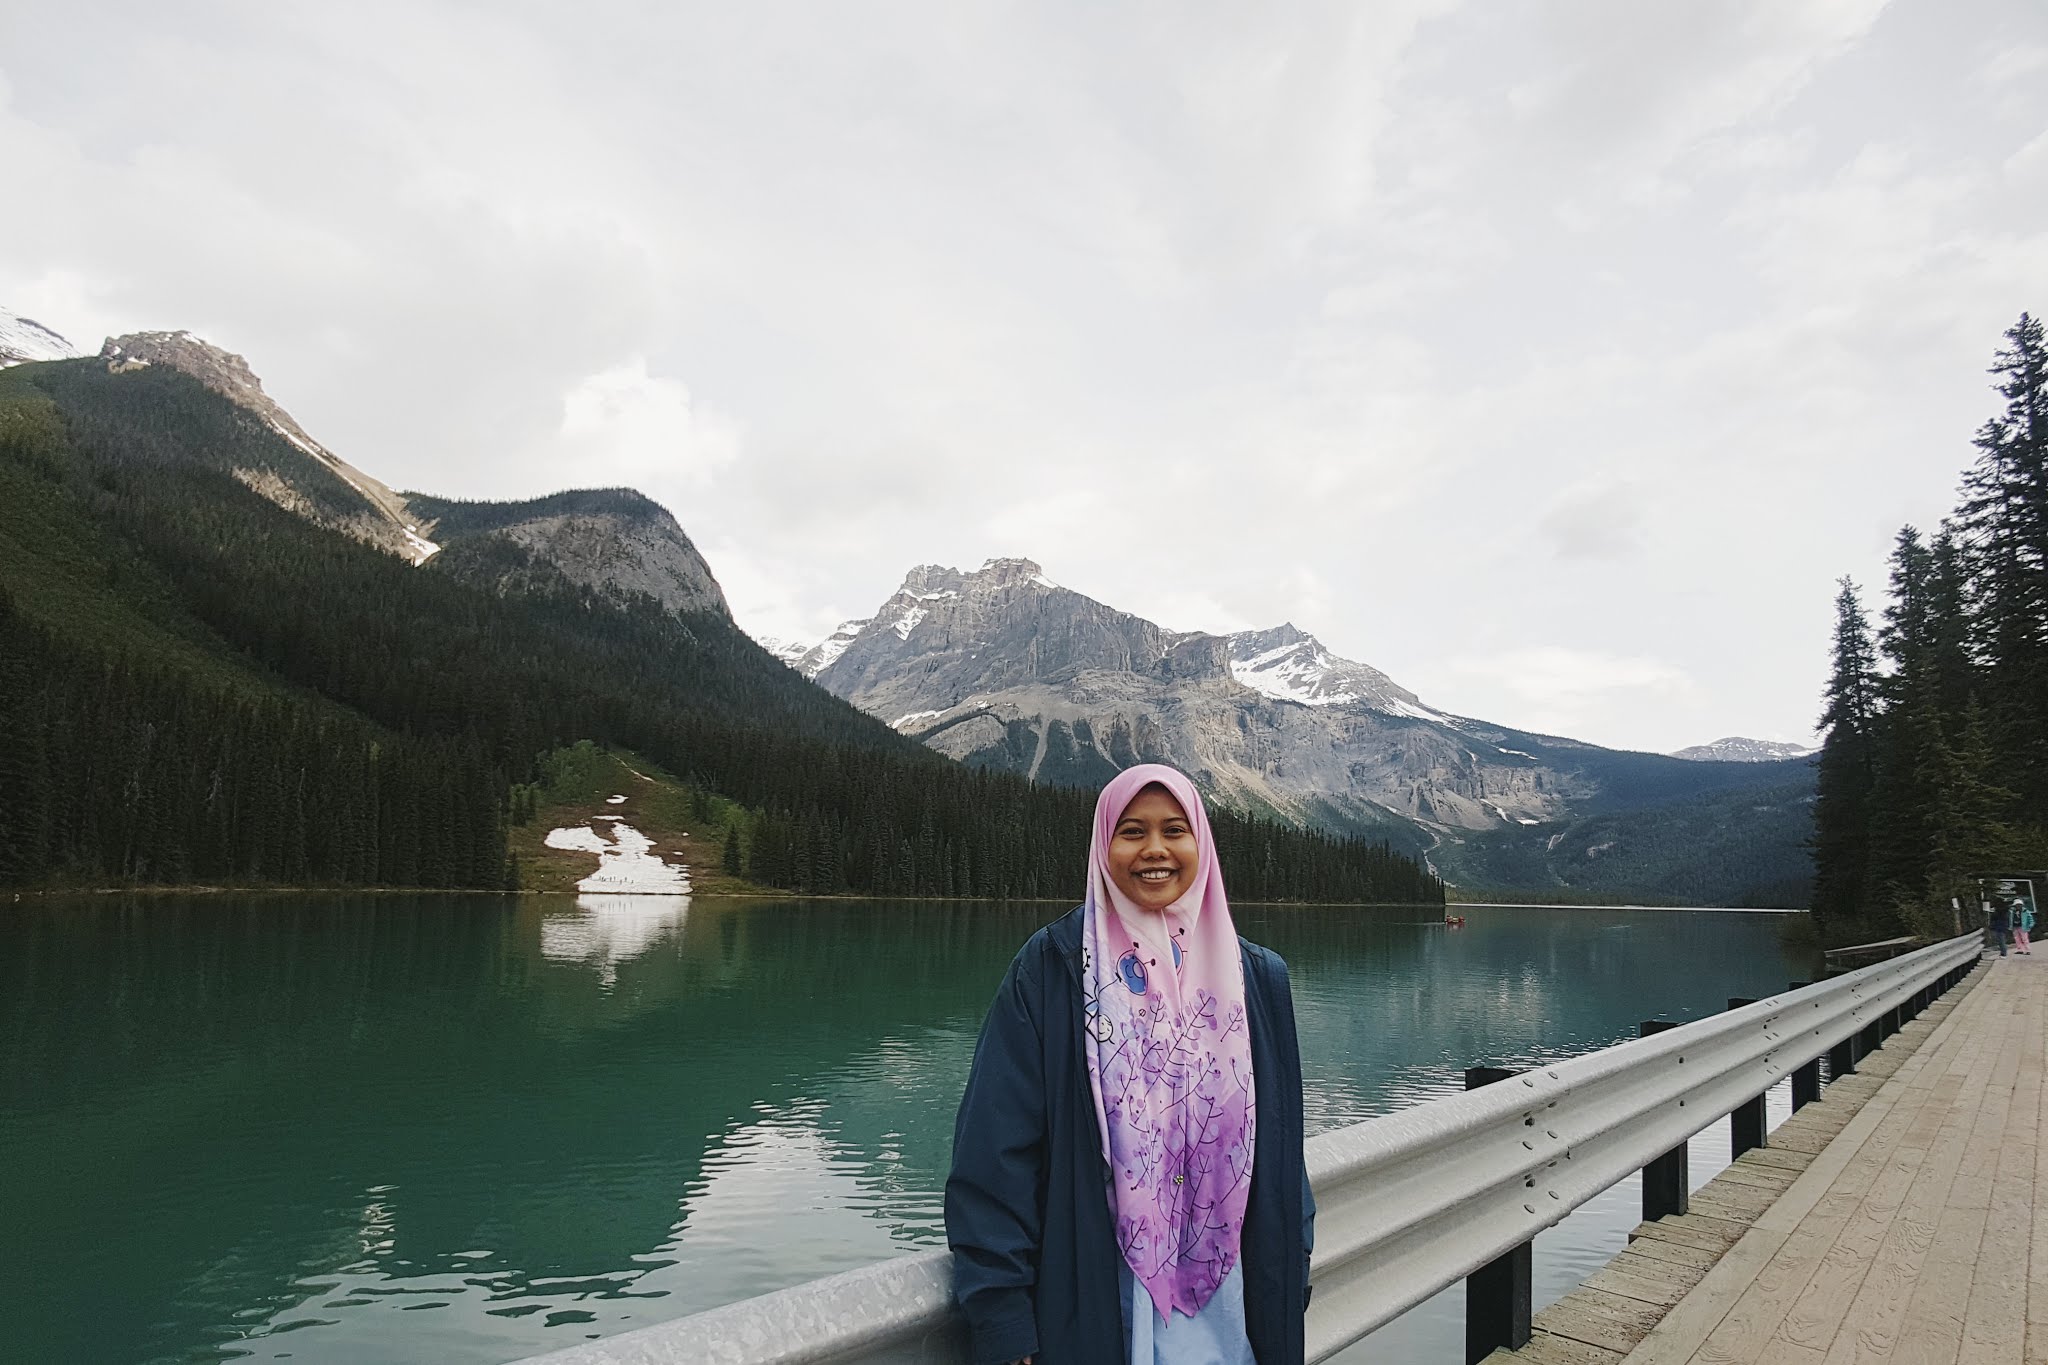 Farah at the Emarald Lake, Yoho National Park, British Columbia, Canada